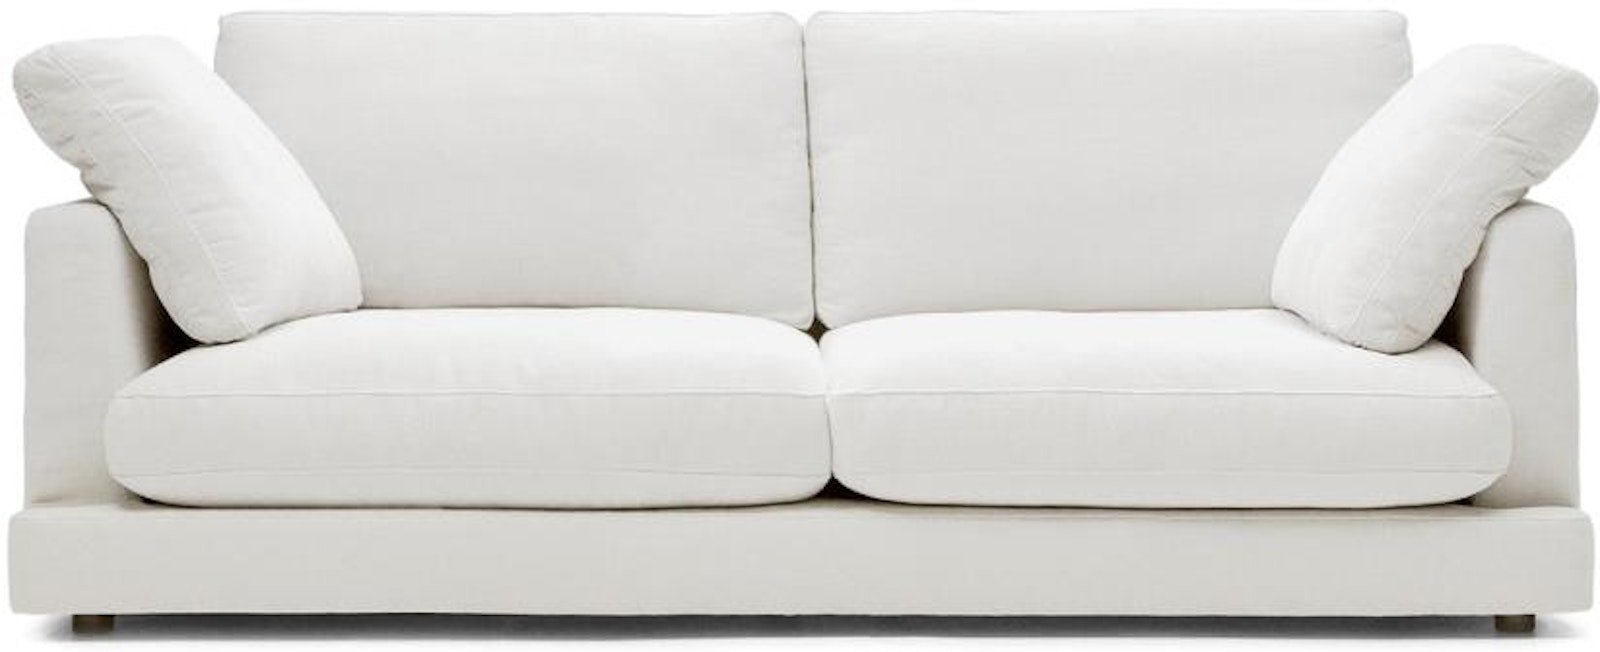 Se Gala, 3-personers sofa, rustik, stof by Kave Home (H: 87 cm. x B: 210 cm. x L: 105 cm., Hvid) hos Likehome.dk